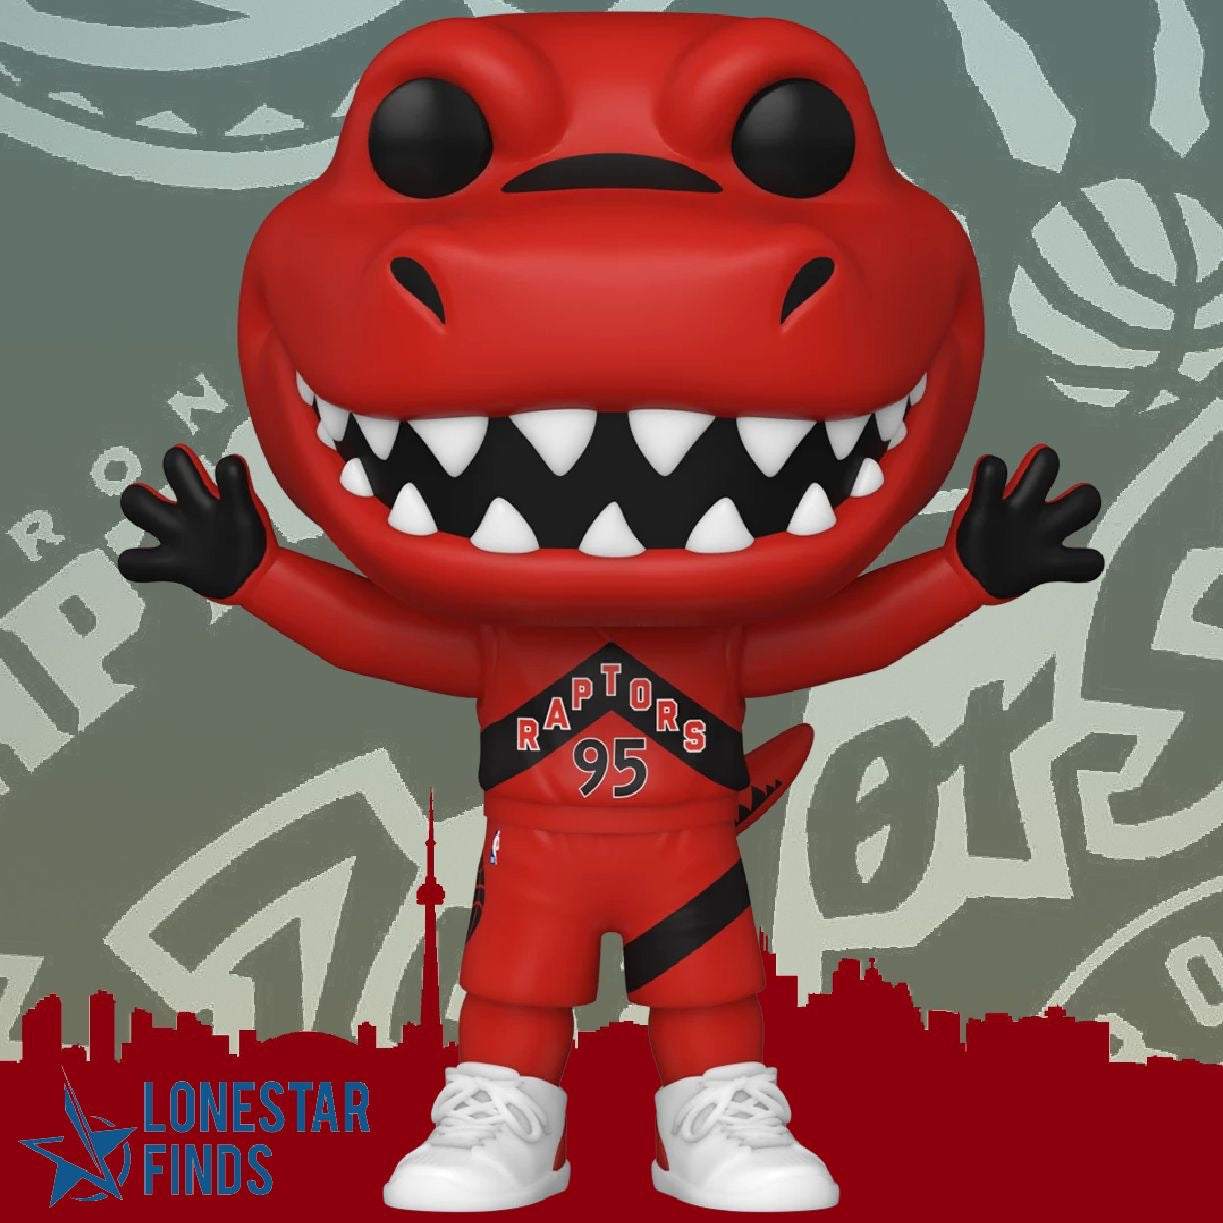 Funko Toronto Raptors NBA Funko POP Mascots | The Raptor